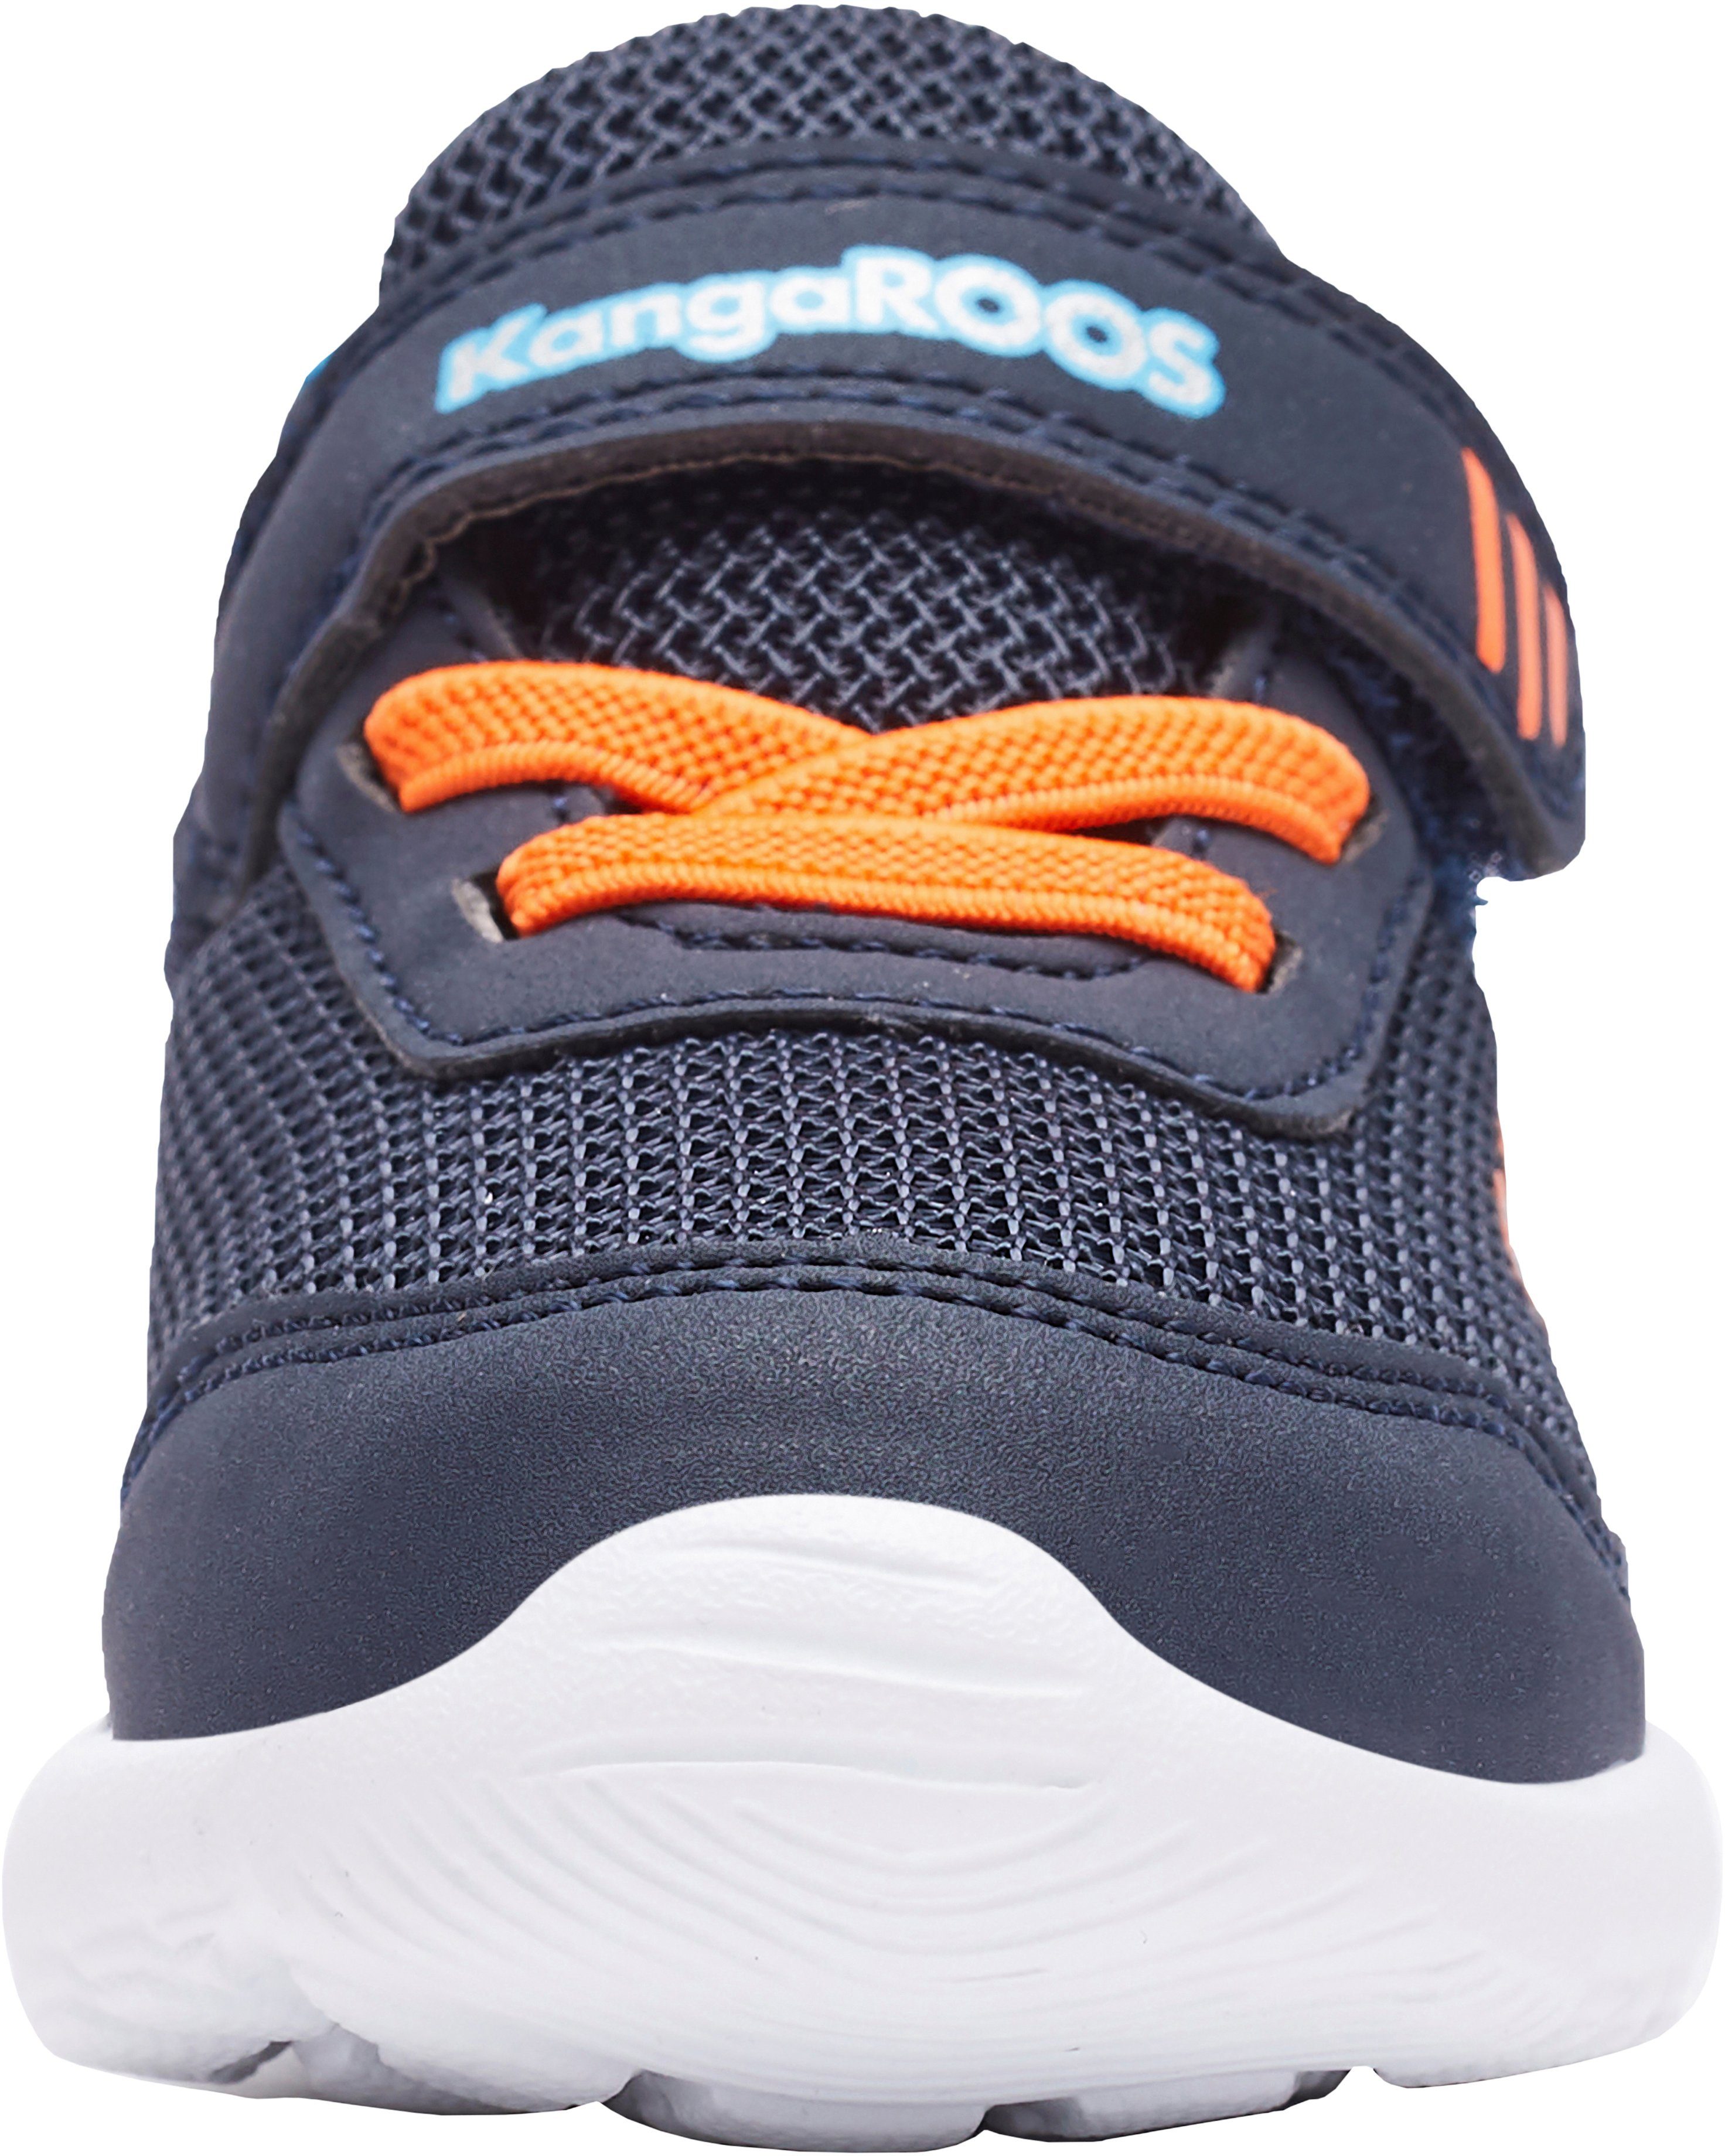 Sneaker KY-Lilo KangaROOS Klettverschluss EV navy-orange mit